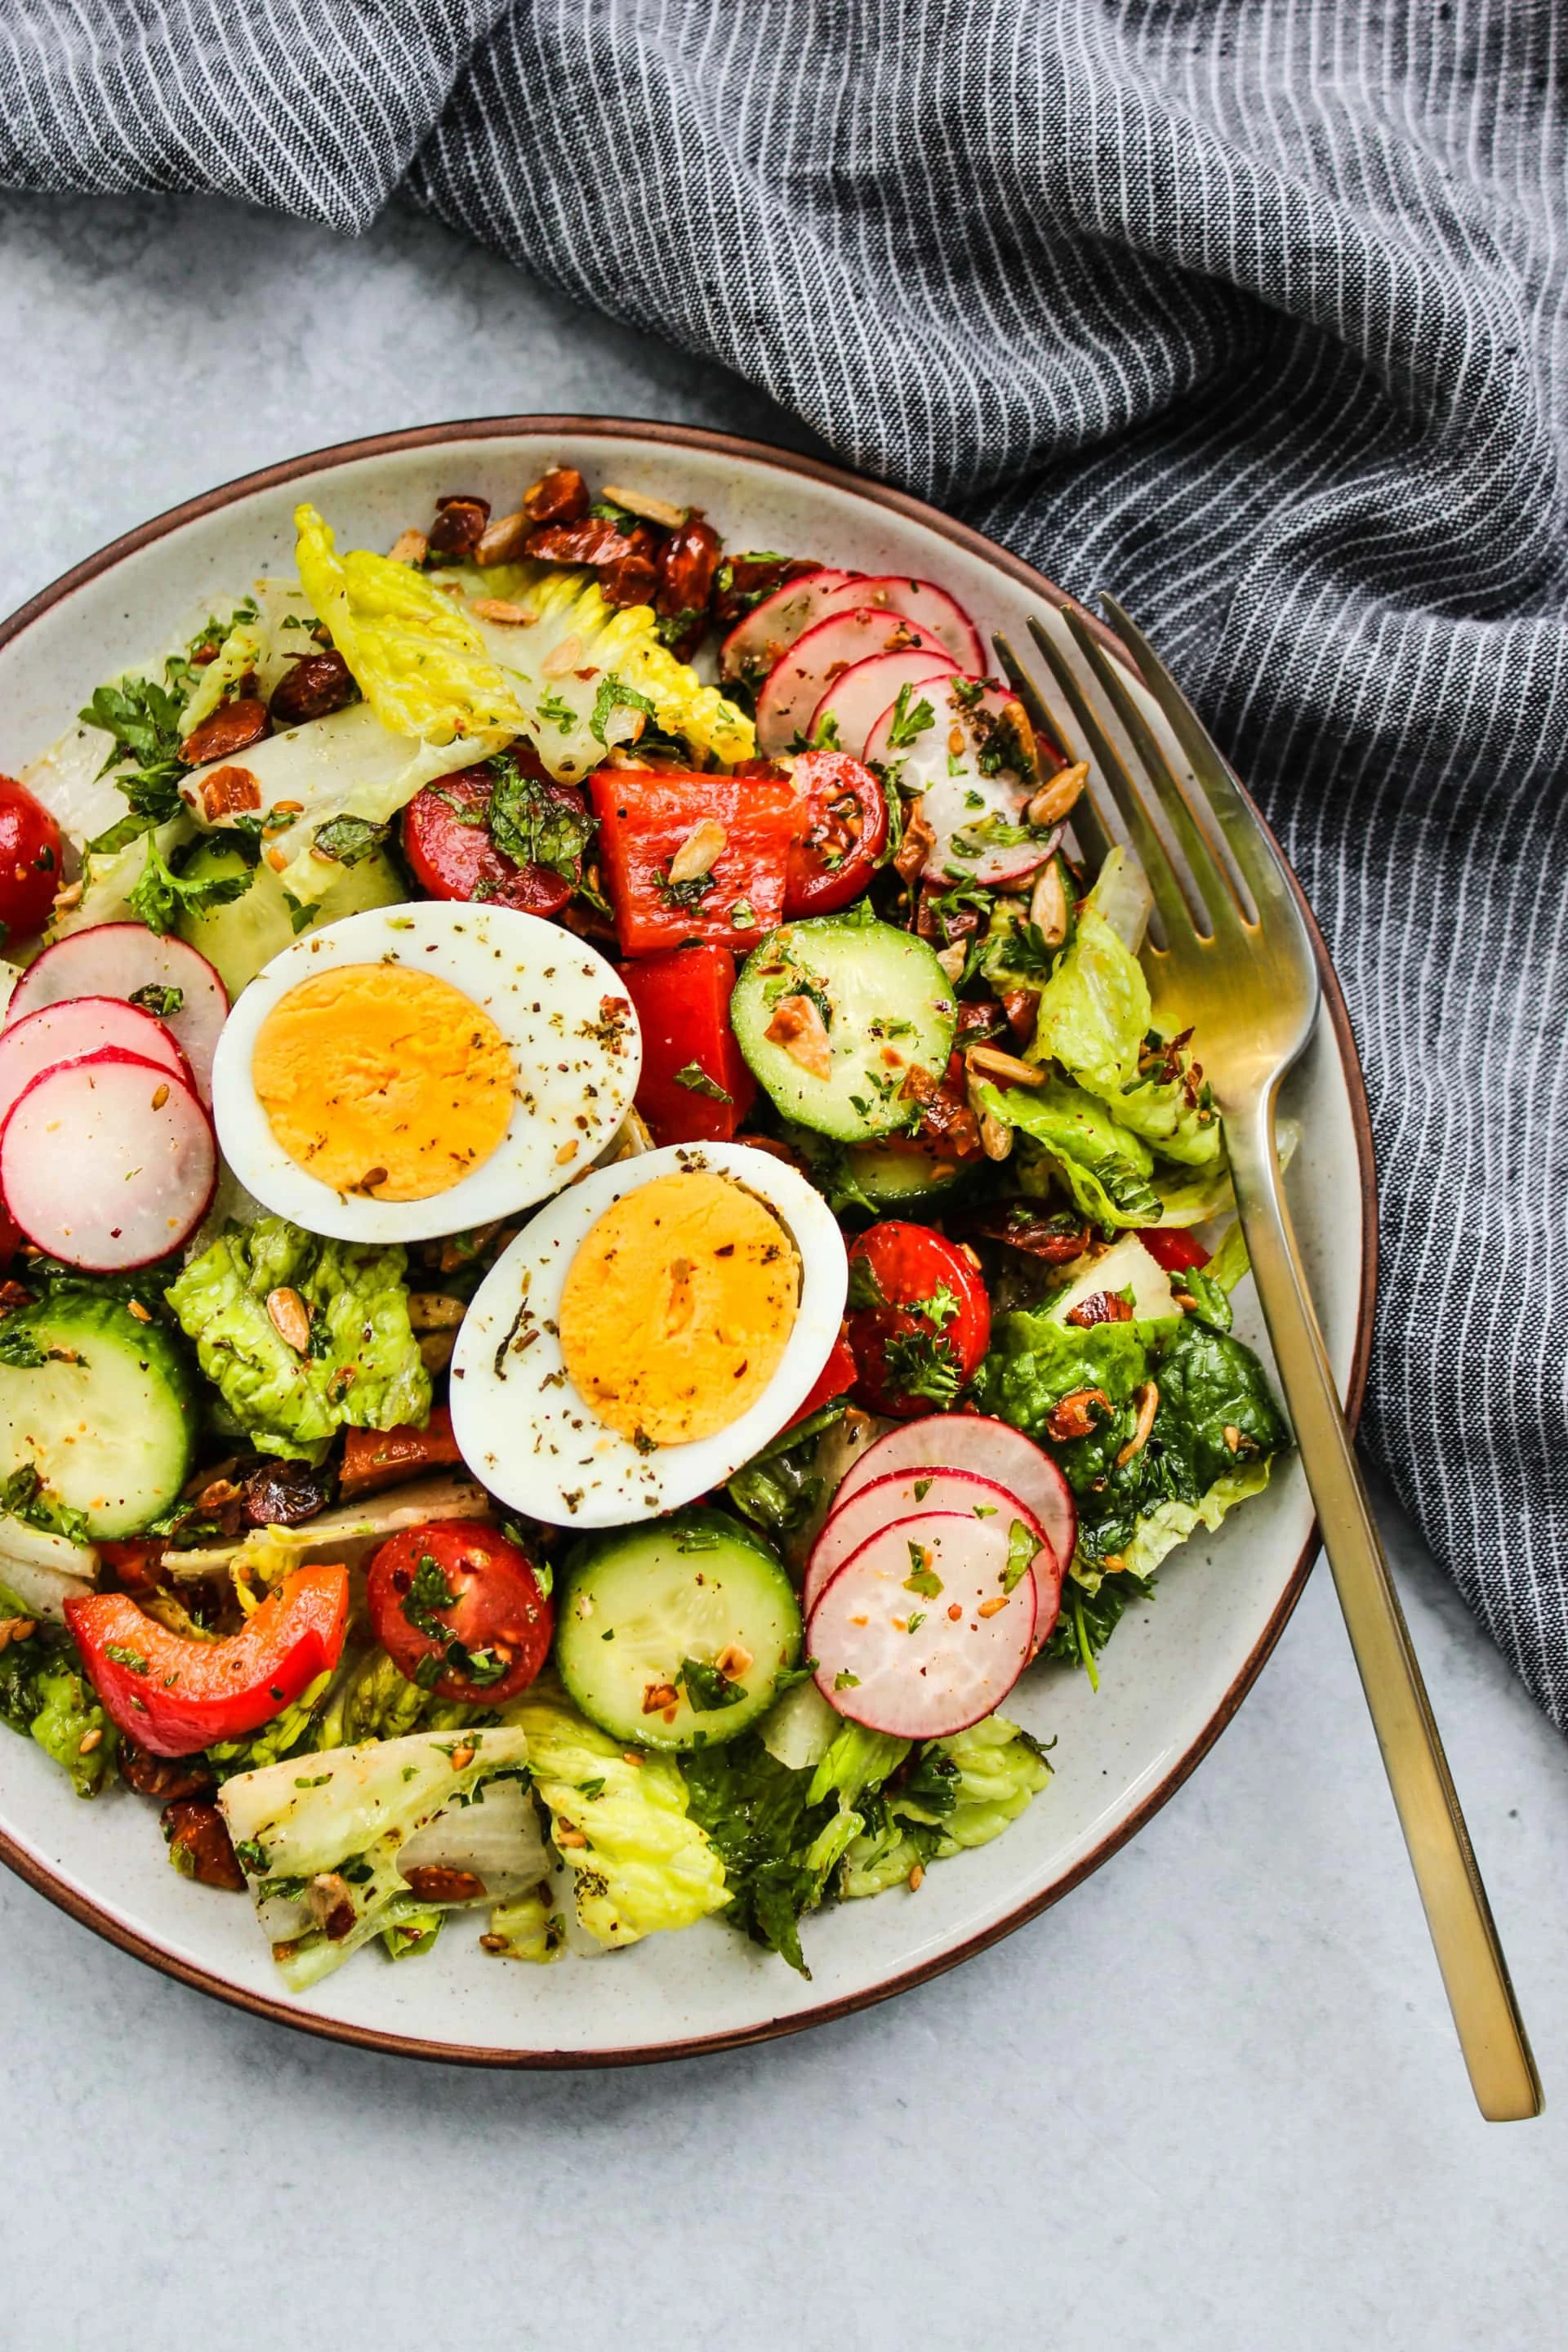 https://www.walderwellness.com/wp-content/uploads/2020/02/Crunchy-Romaine-Salad-With-Zaatar-Dressing-Walder-Wellness-6.jpg